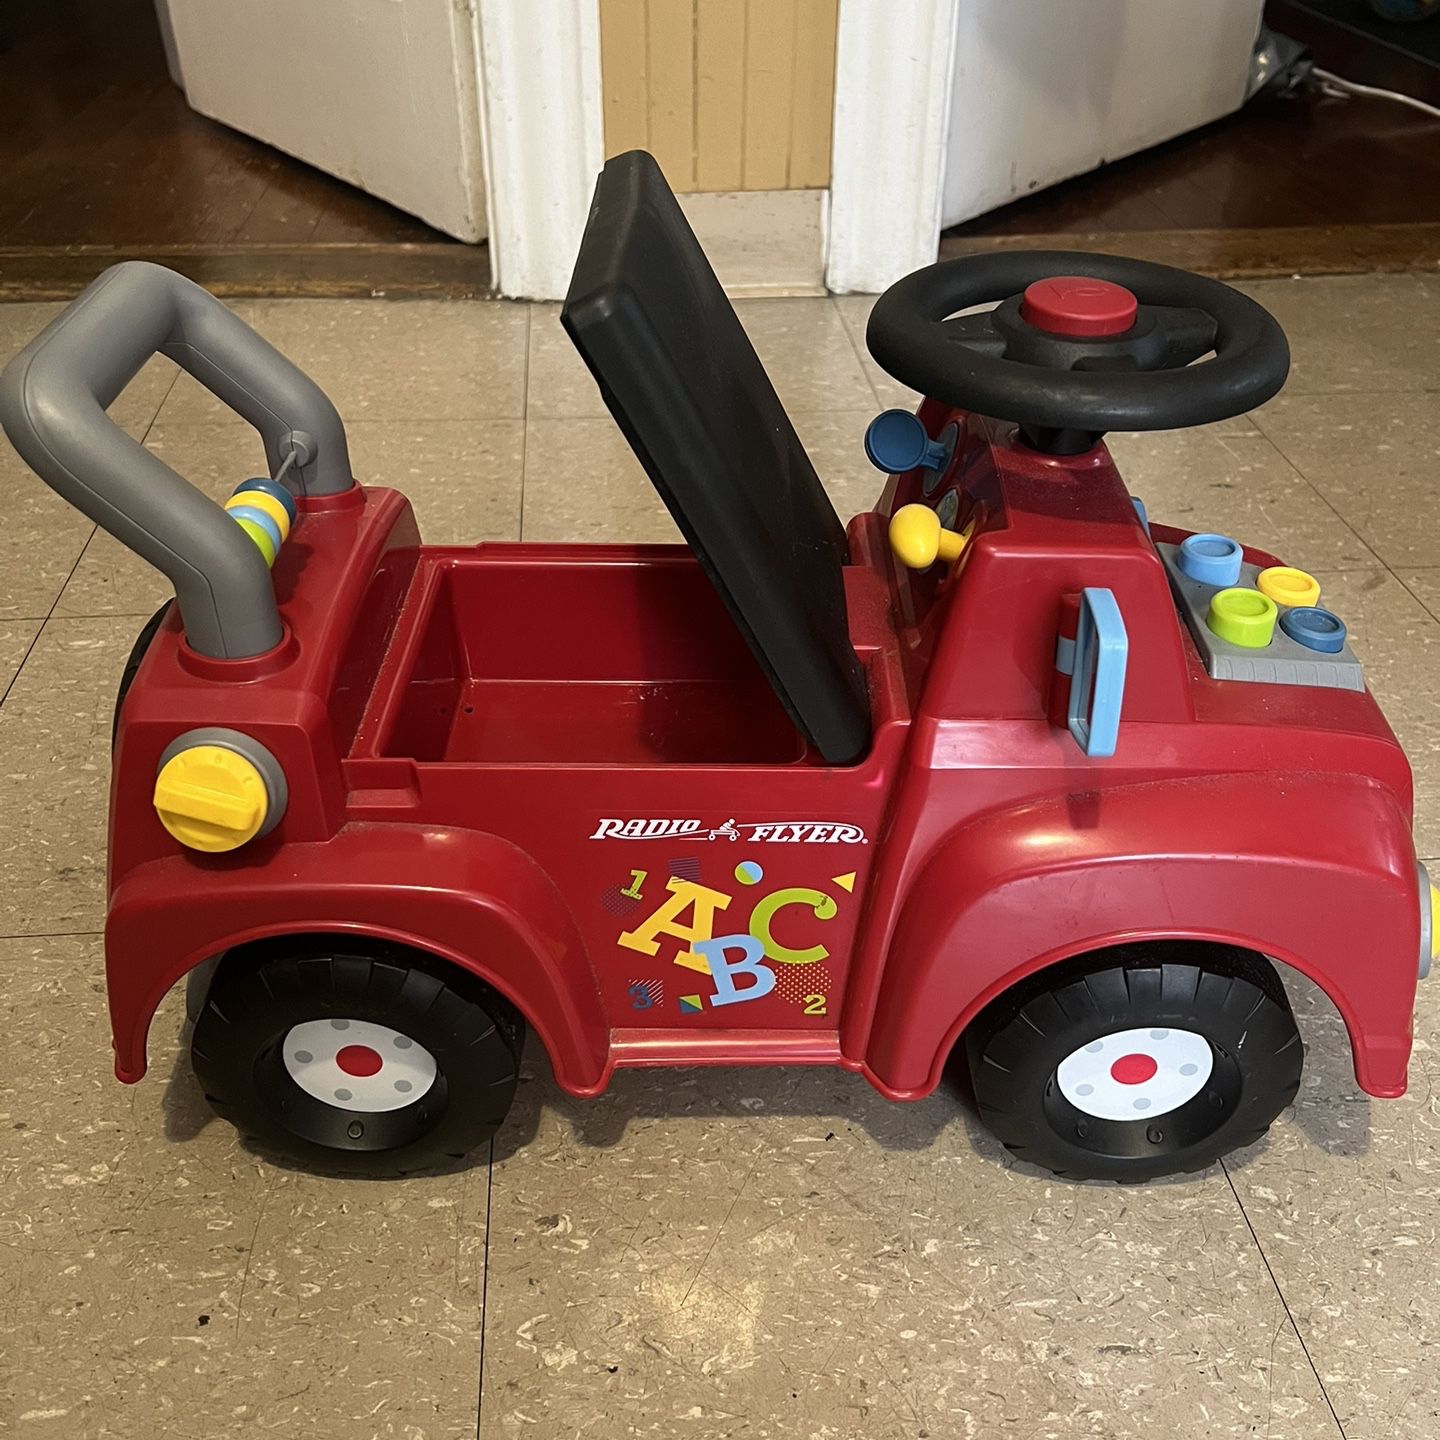 RadioFlyer Toy Car